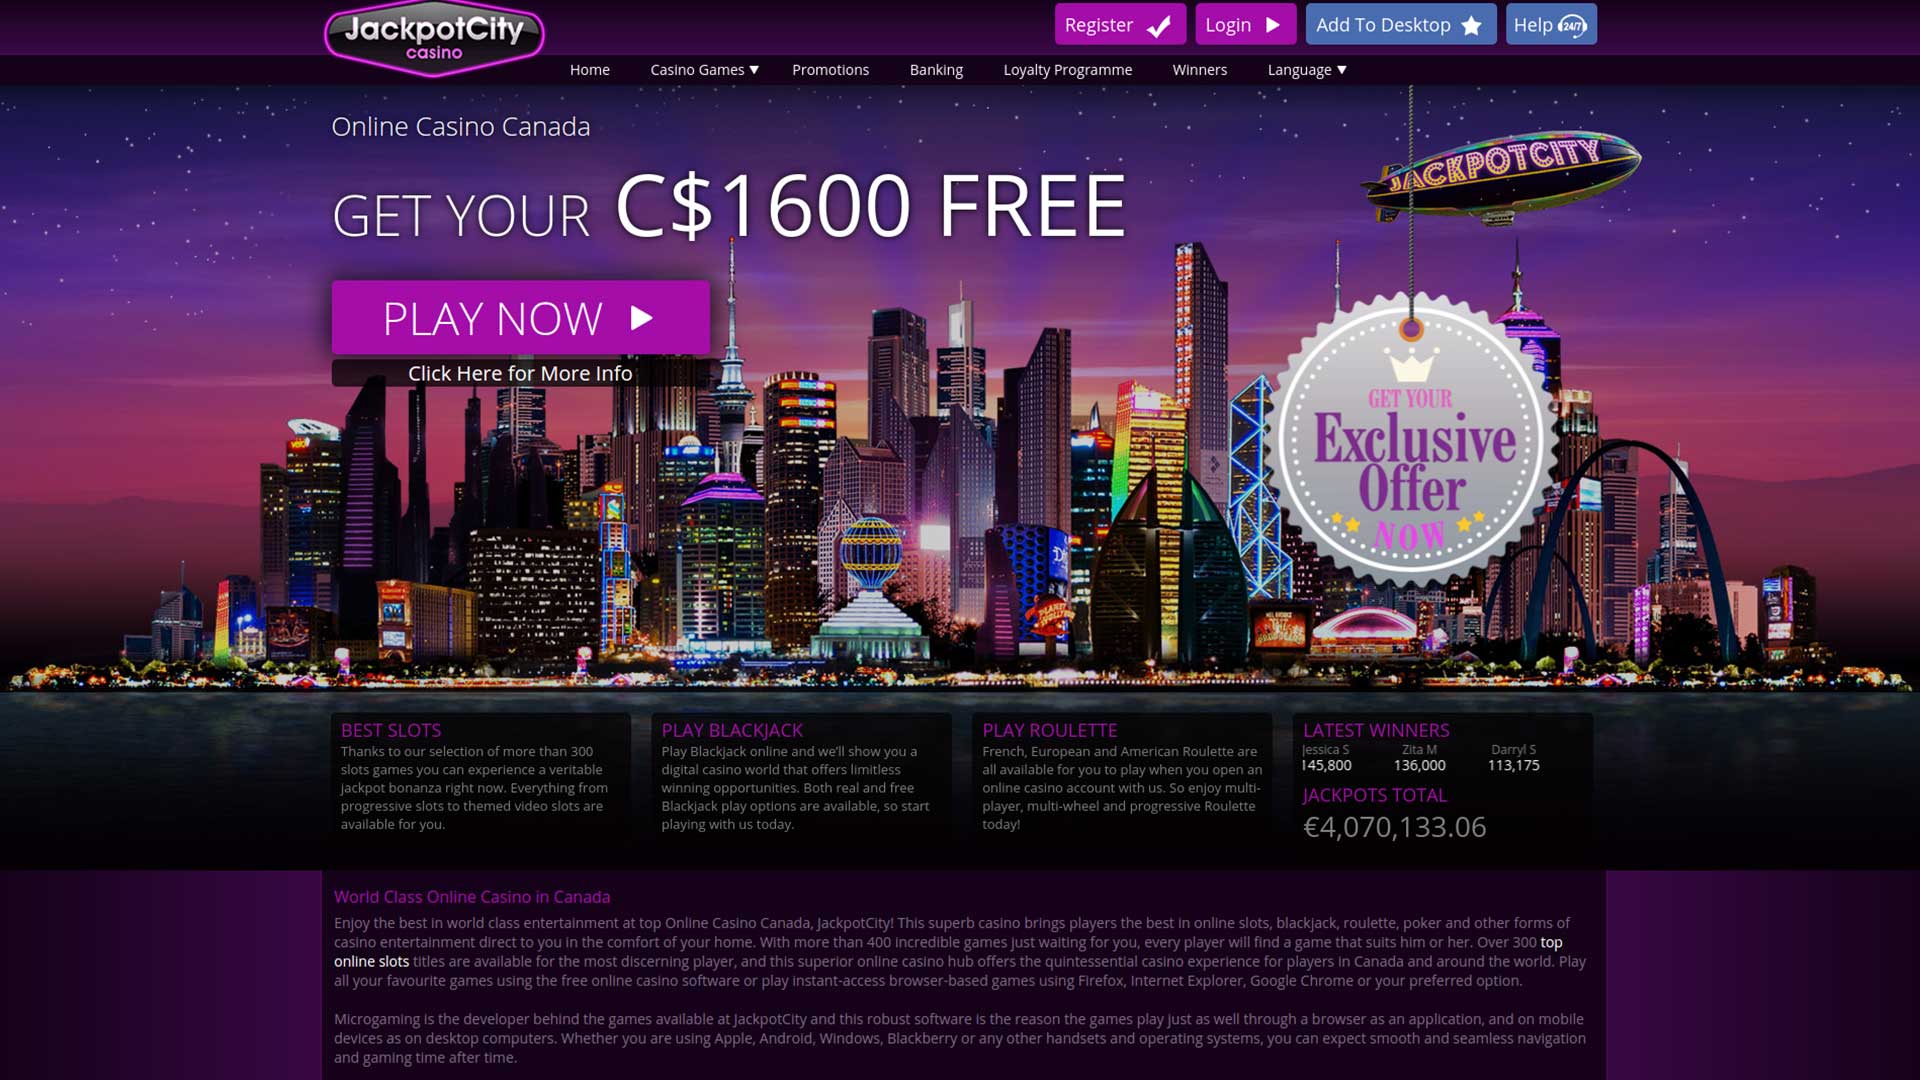 jackpot city casino online gambling